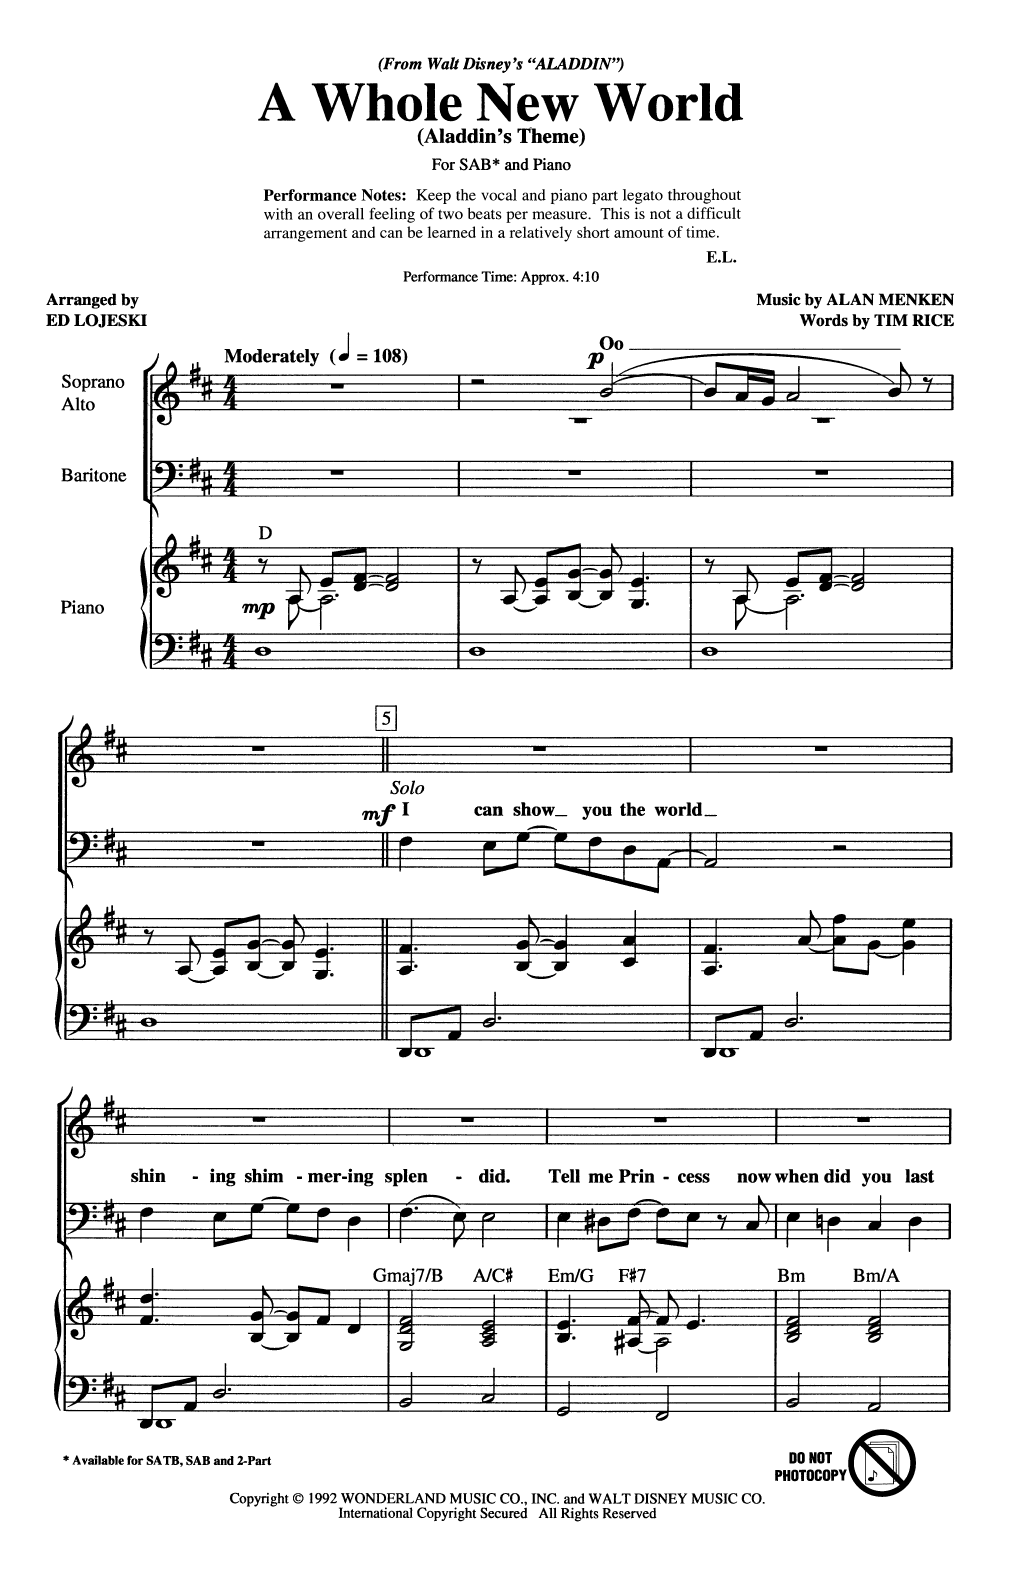 Alan Menken A Whole New World (Aladdin's Theme) (from Disney's Aladdin) (arr. Ed Lojeski) Sheet Music Notes & Chords for SATB Choir - Download or Print PDF